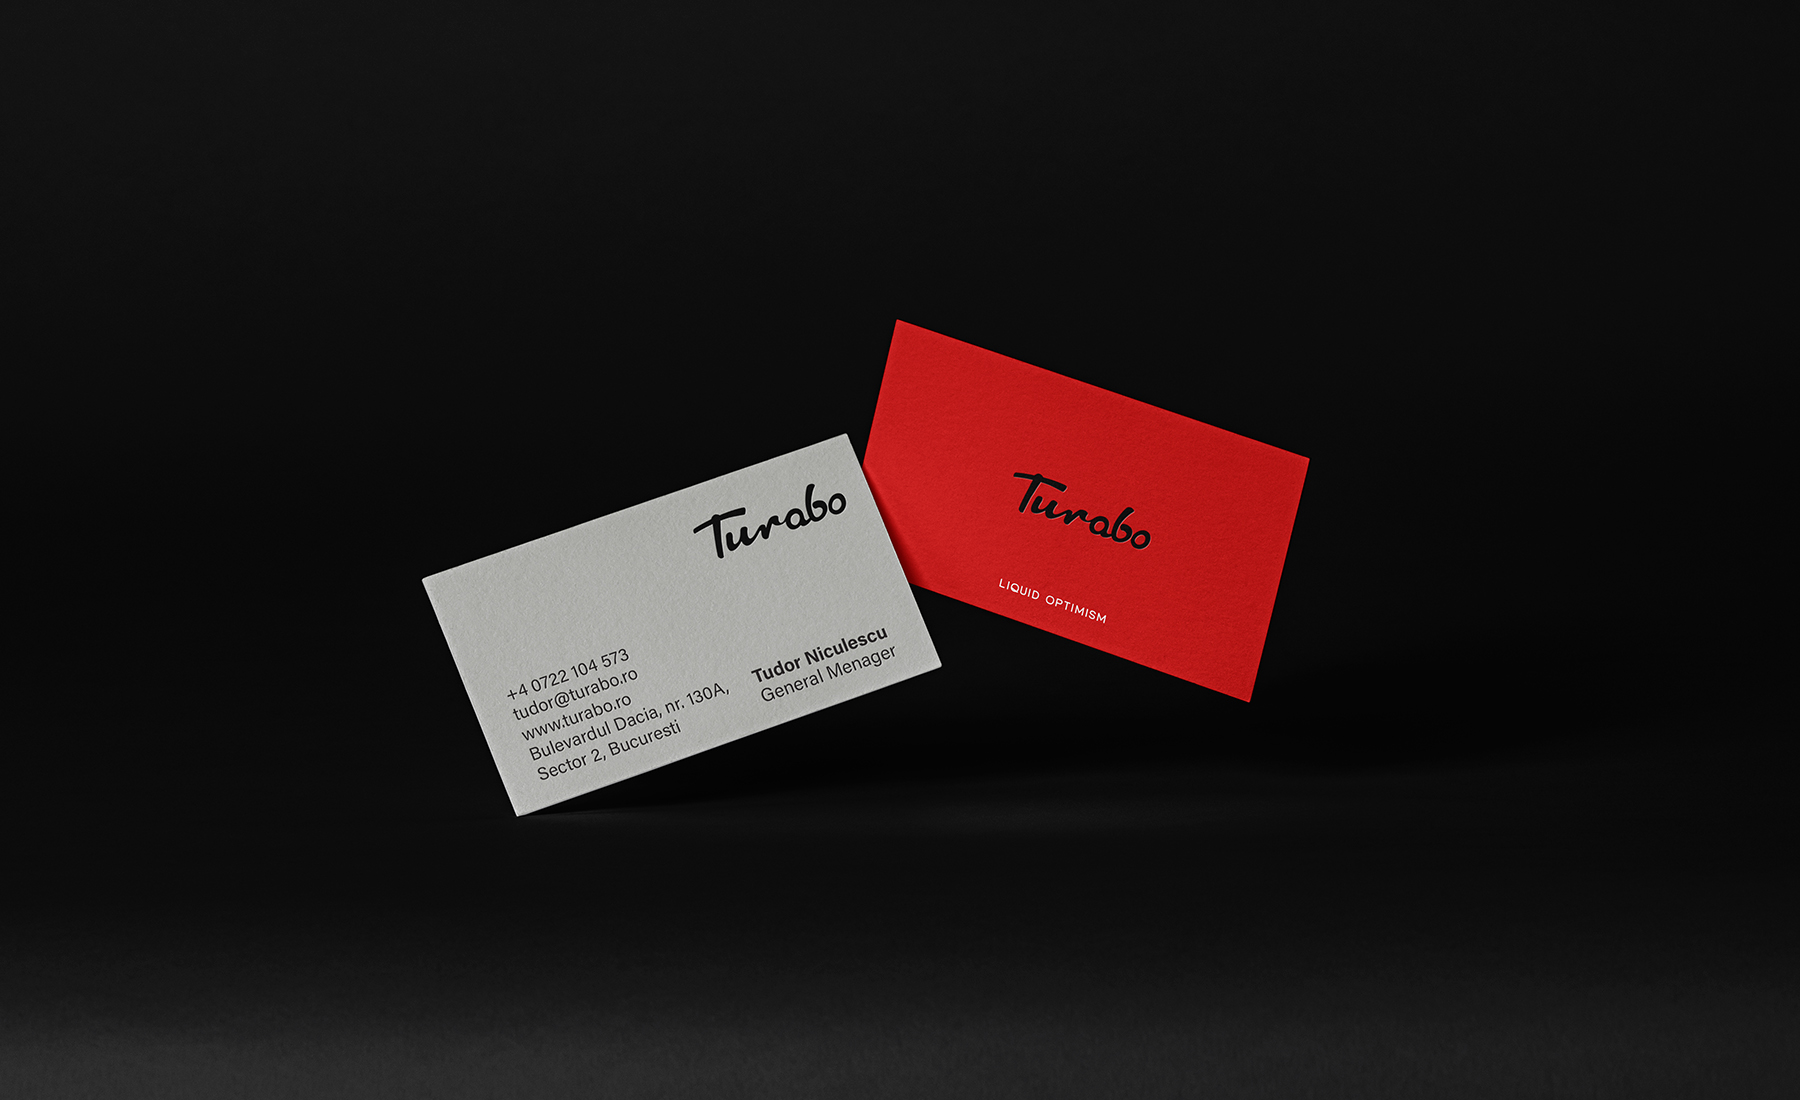 Turabo business card design